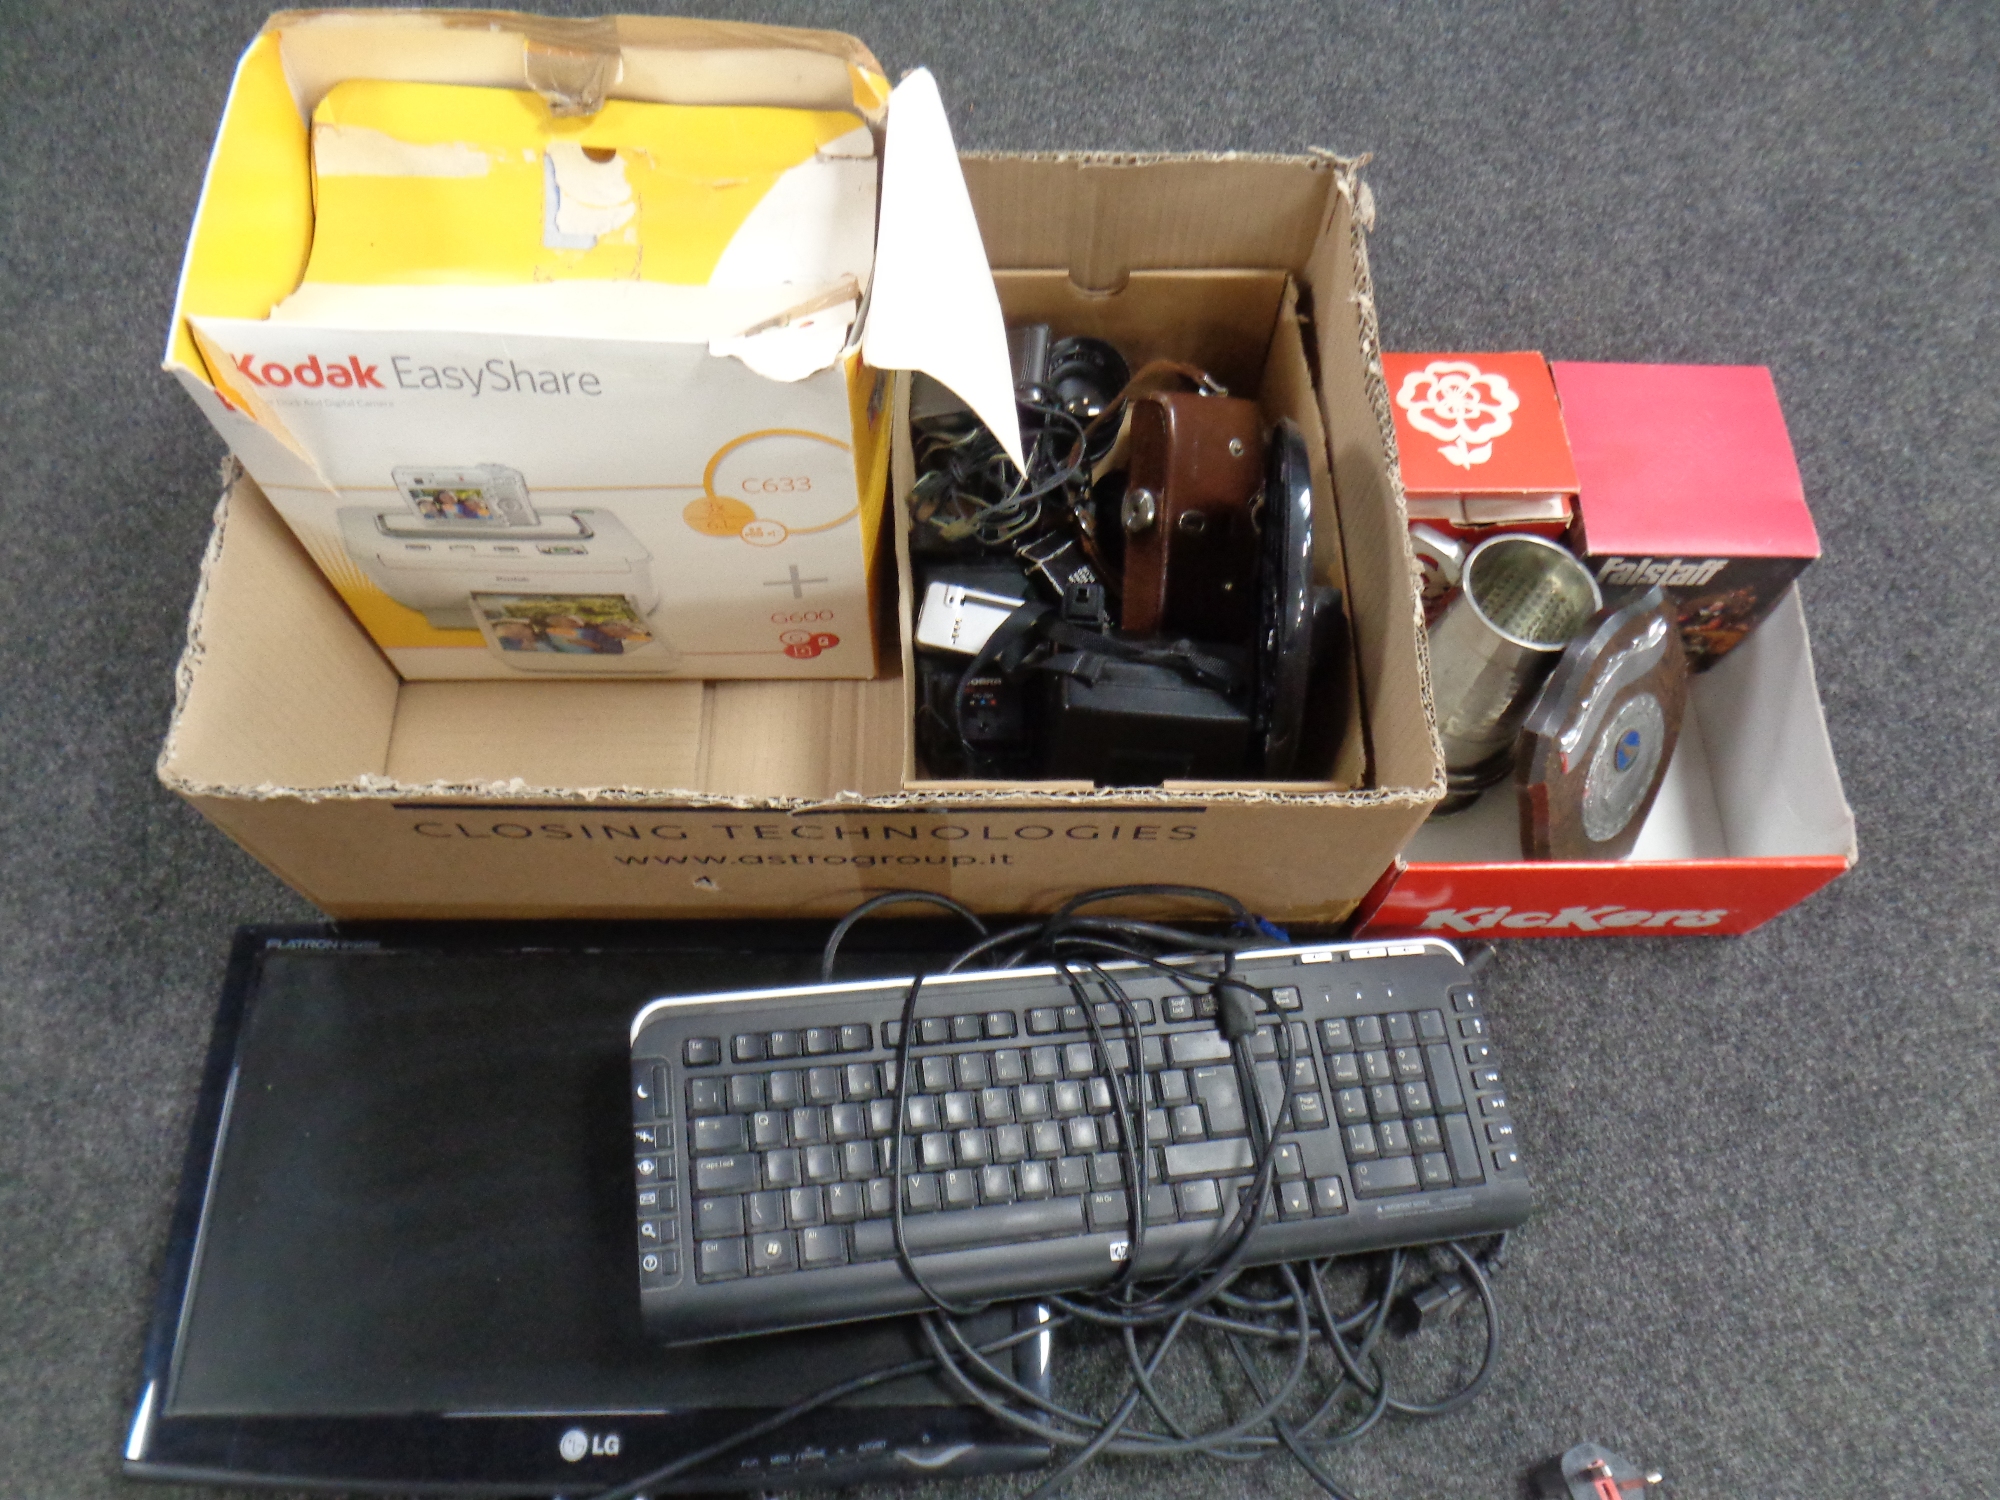 A box of cameras, LG monitor with keyboard, Kodak printer, further box of metal wares,